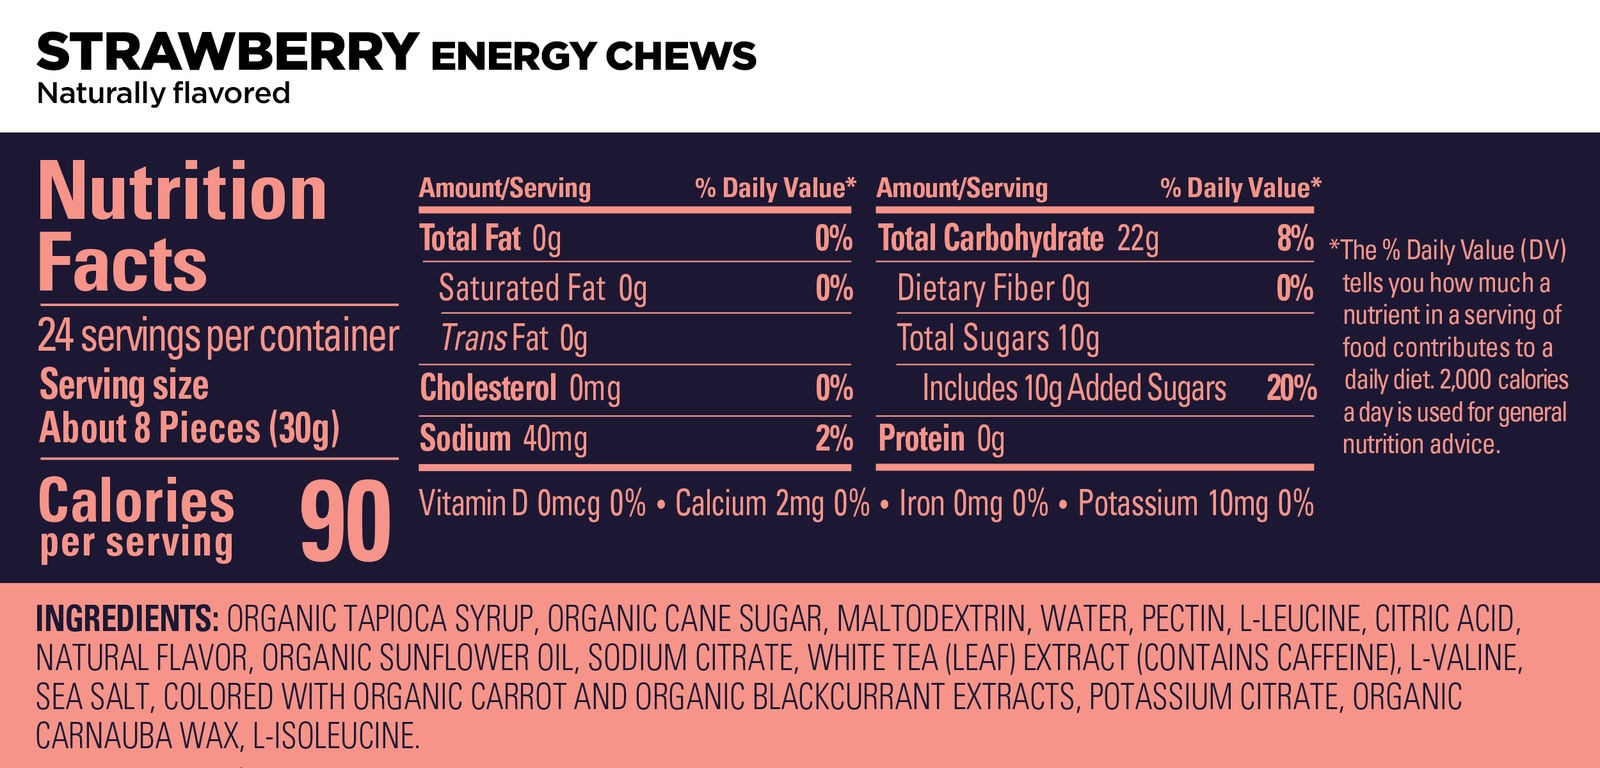 GU Energy Chews Strawberry (12 x 60g)